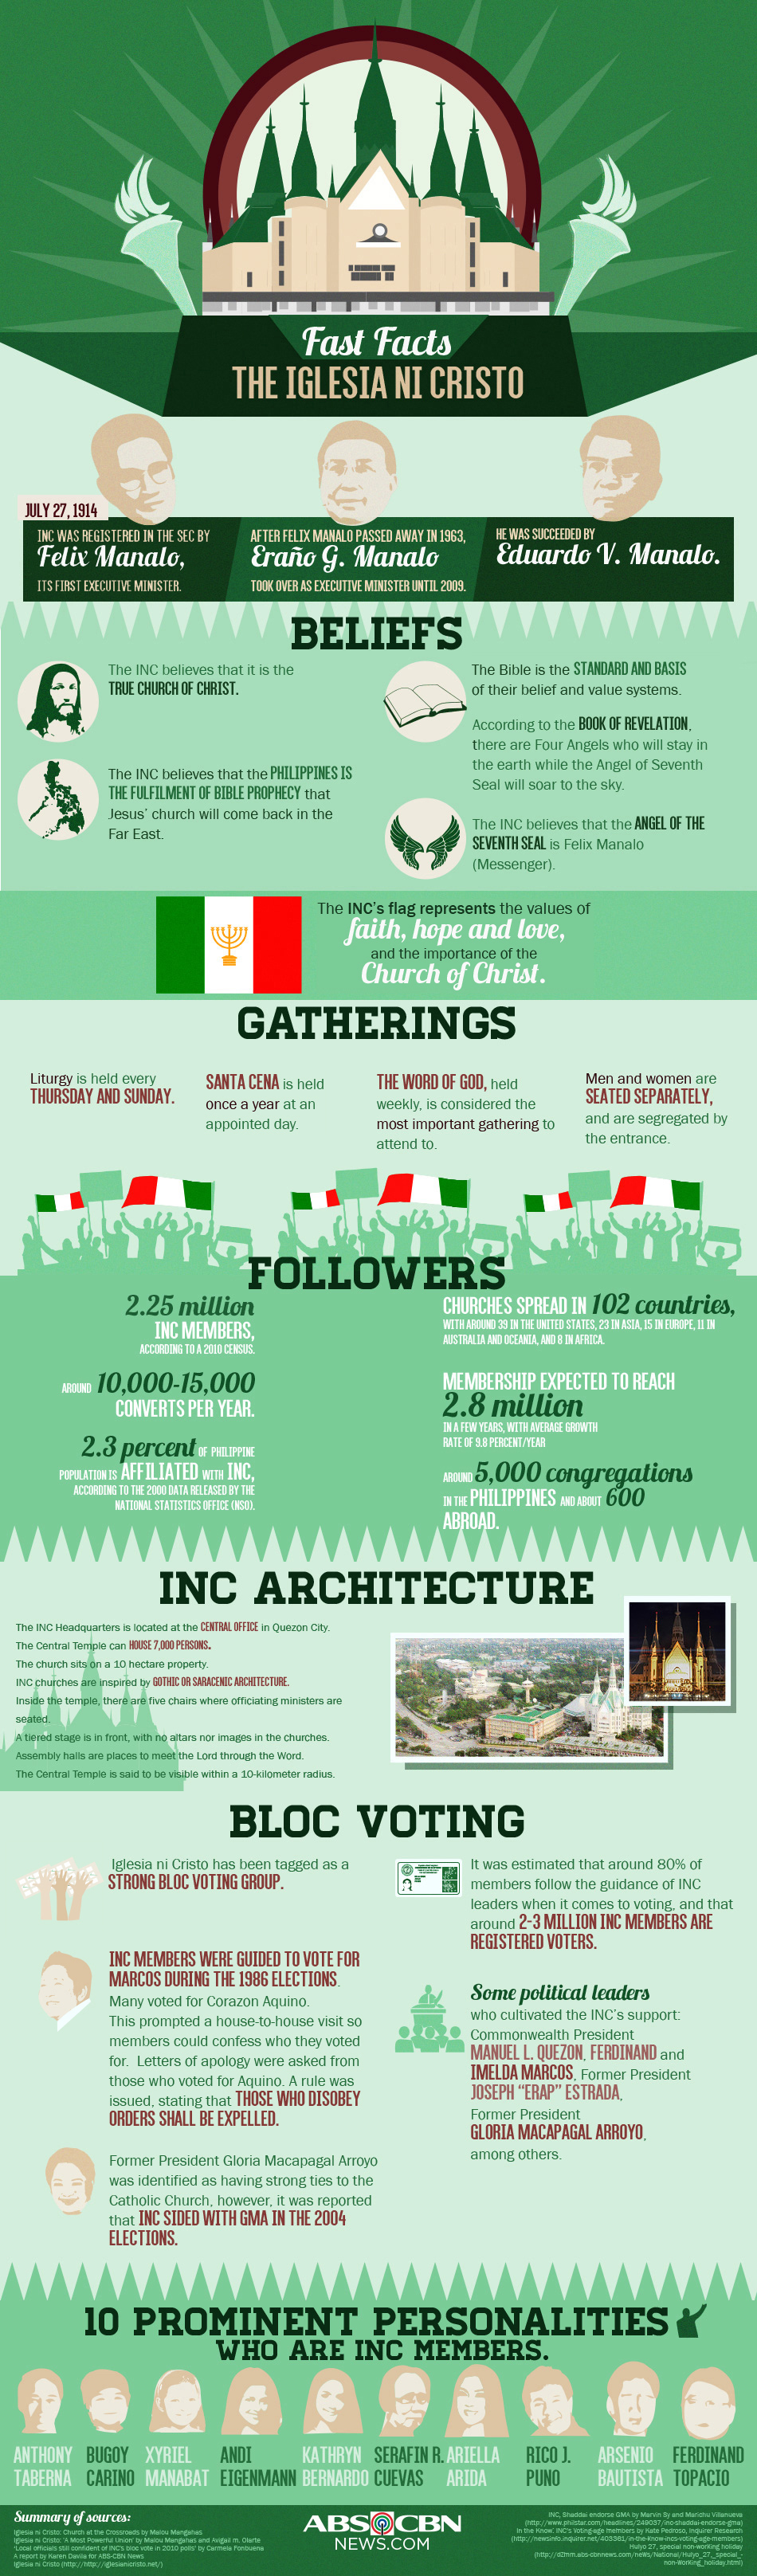 Fast Facts on INC (Iglesia ni Cristo) Infographic